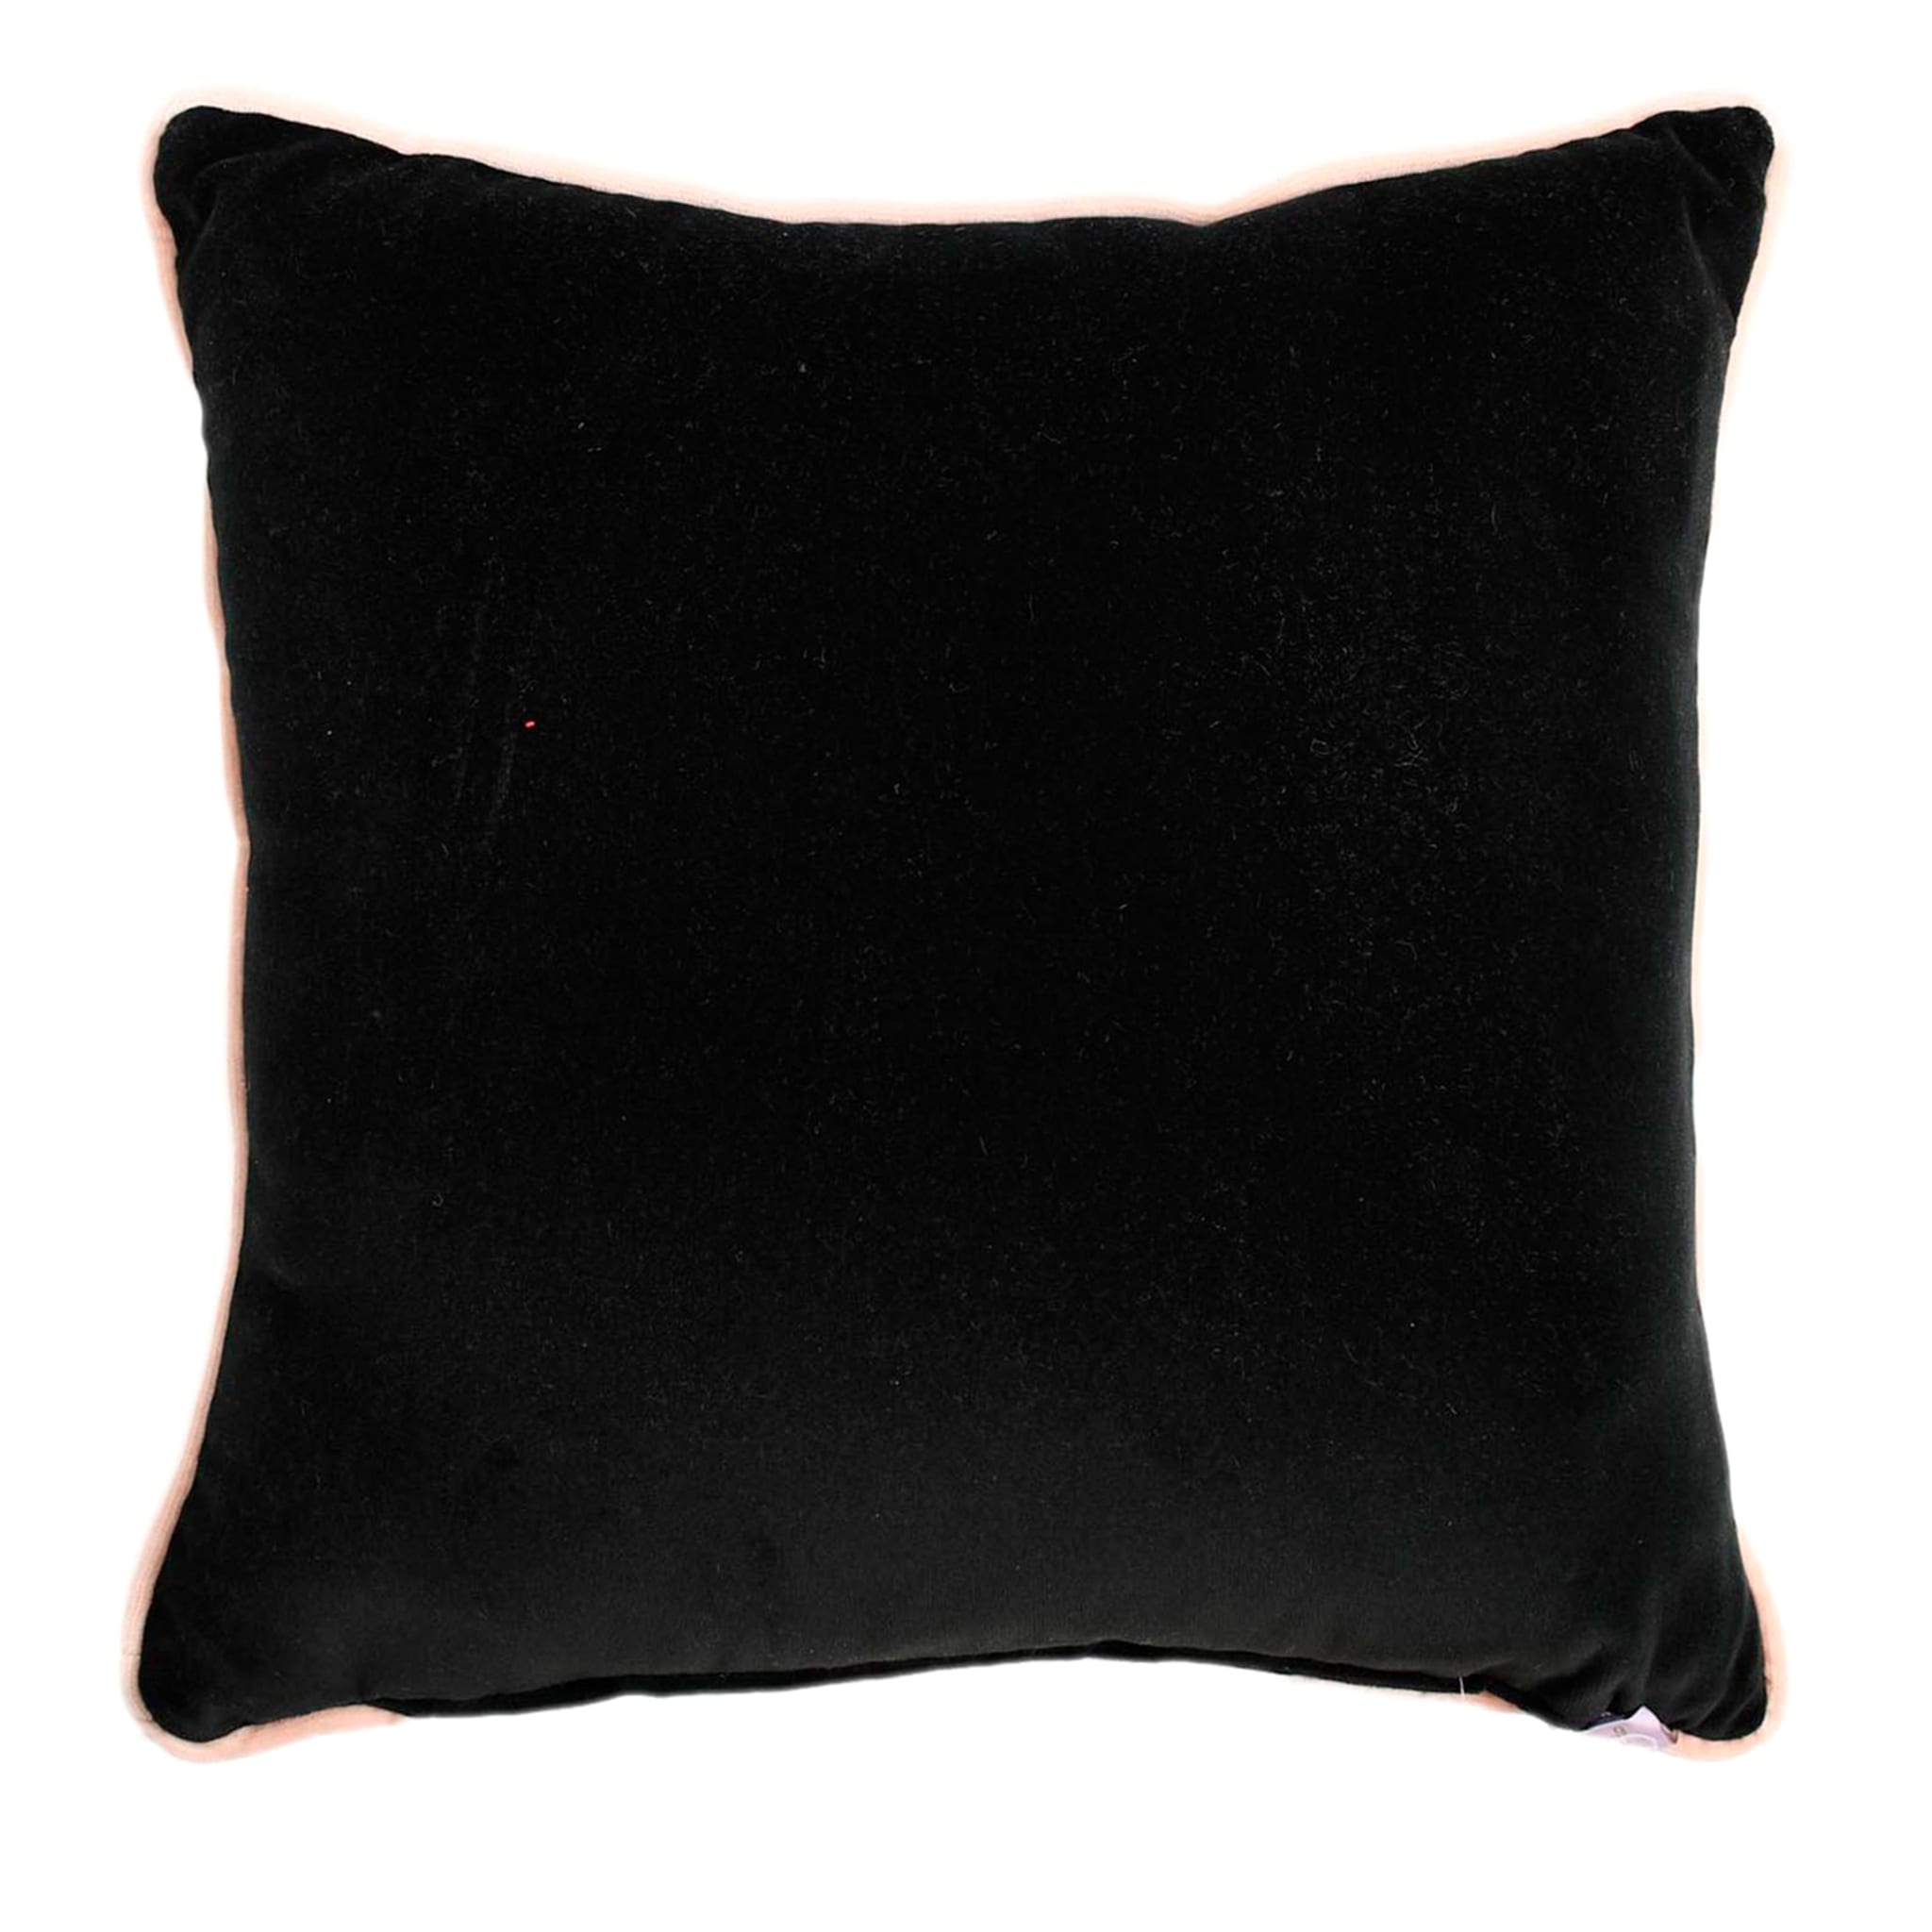 Decorative Carrè Cushion in Micro-Patterned jacquard fabric - Alternative view 1